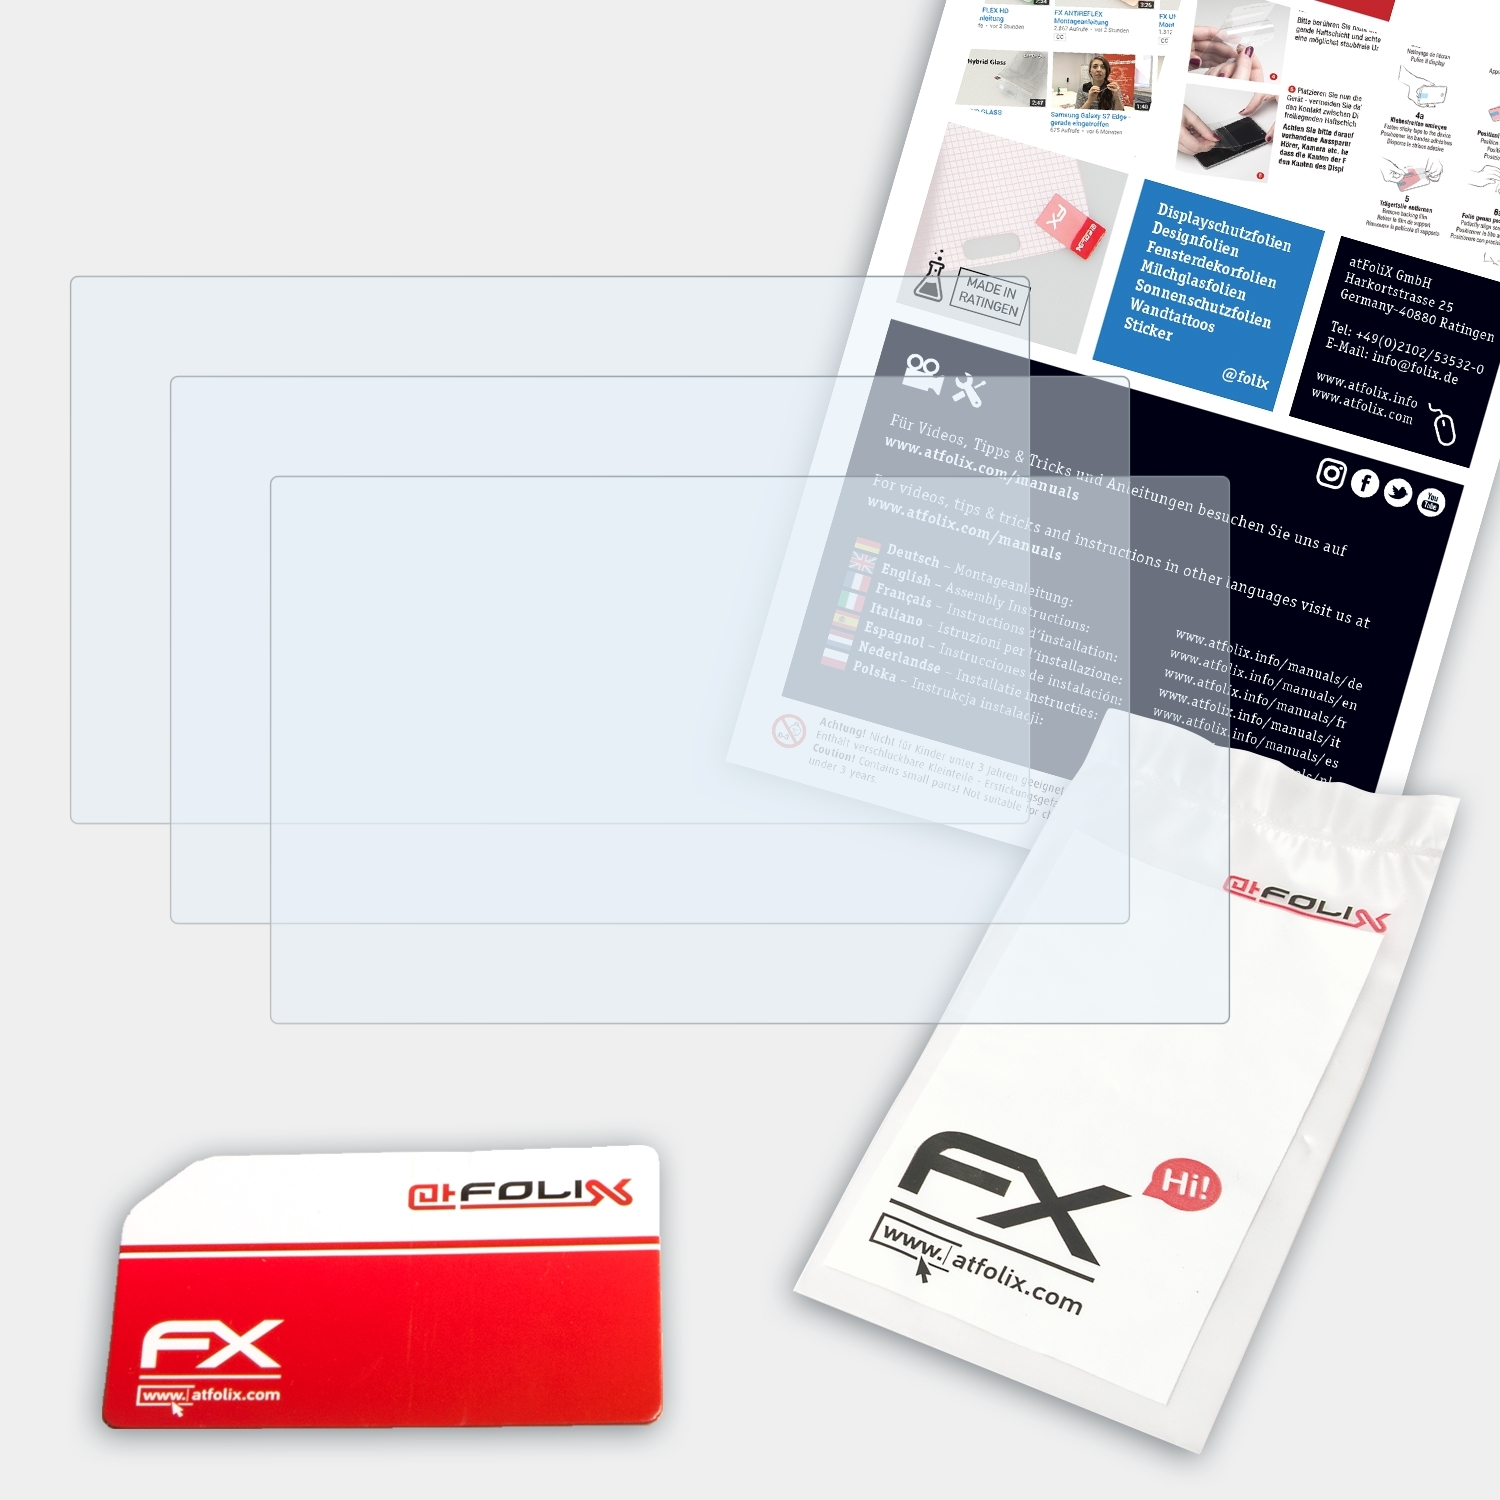 Displayschutz(für 3x FX-Clear Fujifilm FinePix ATFOLIX Z900EXR)